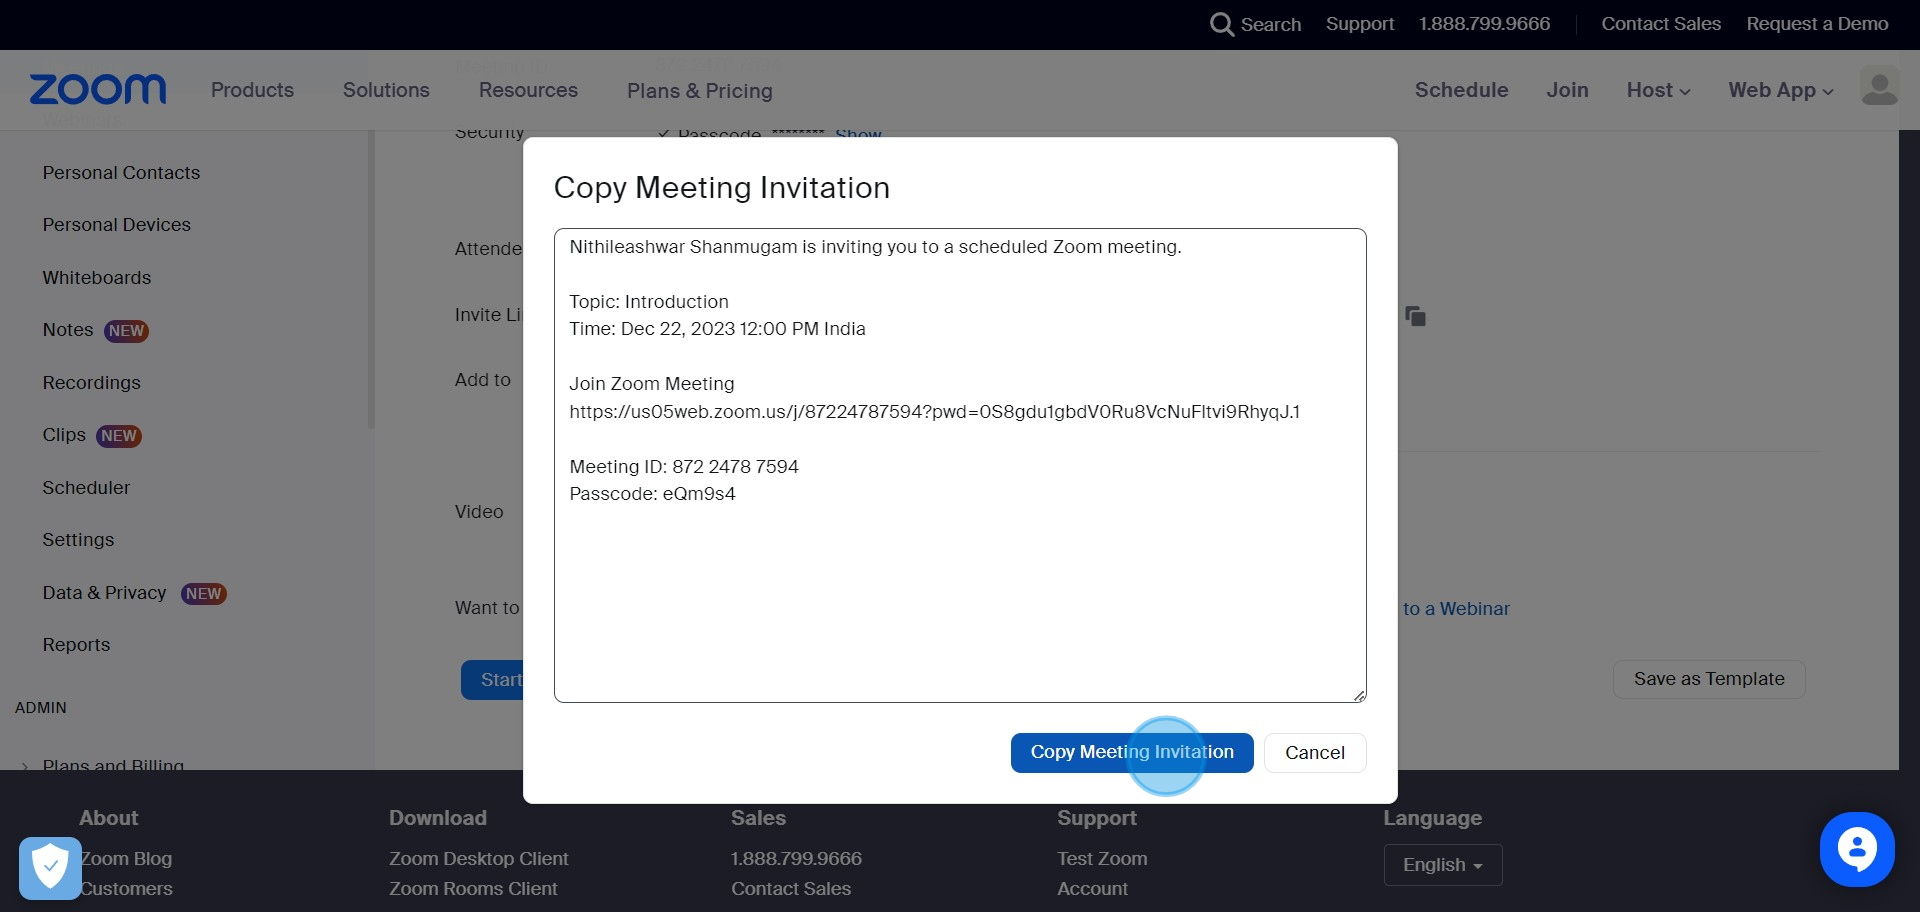 13 Click on "Copy Meeting Invitation"